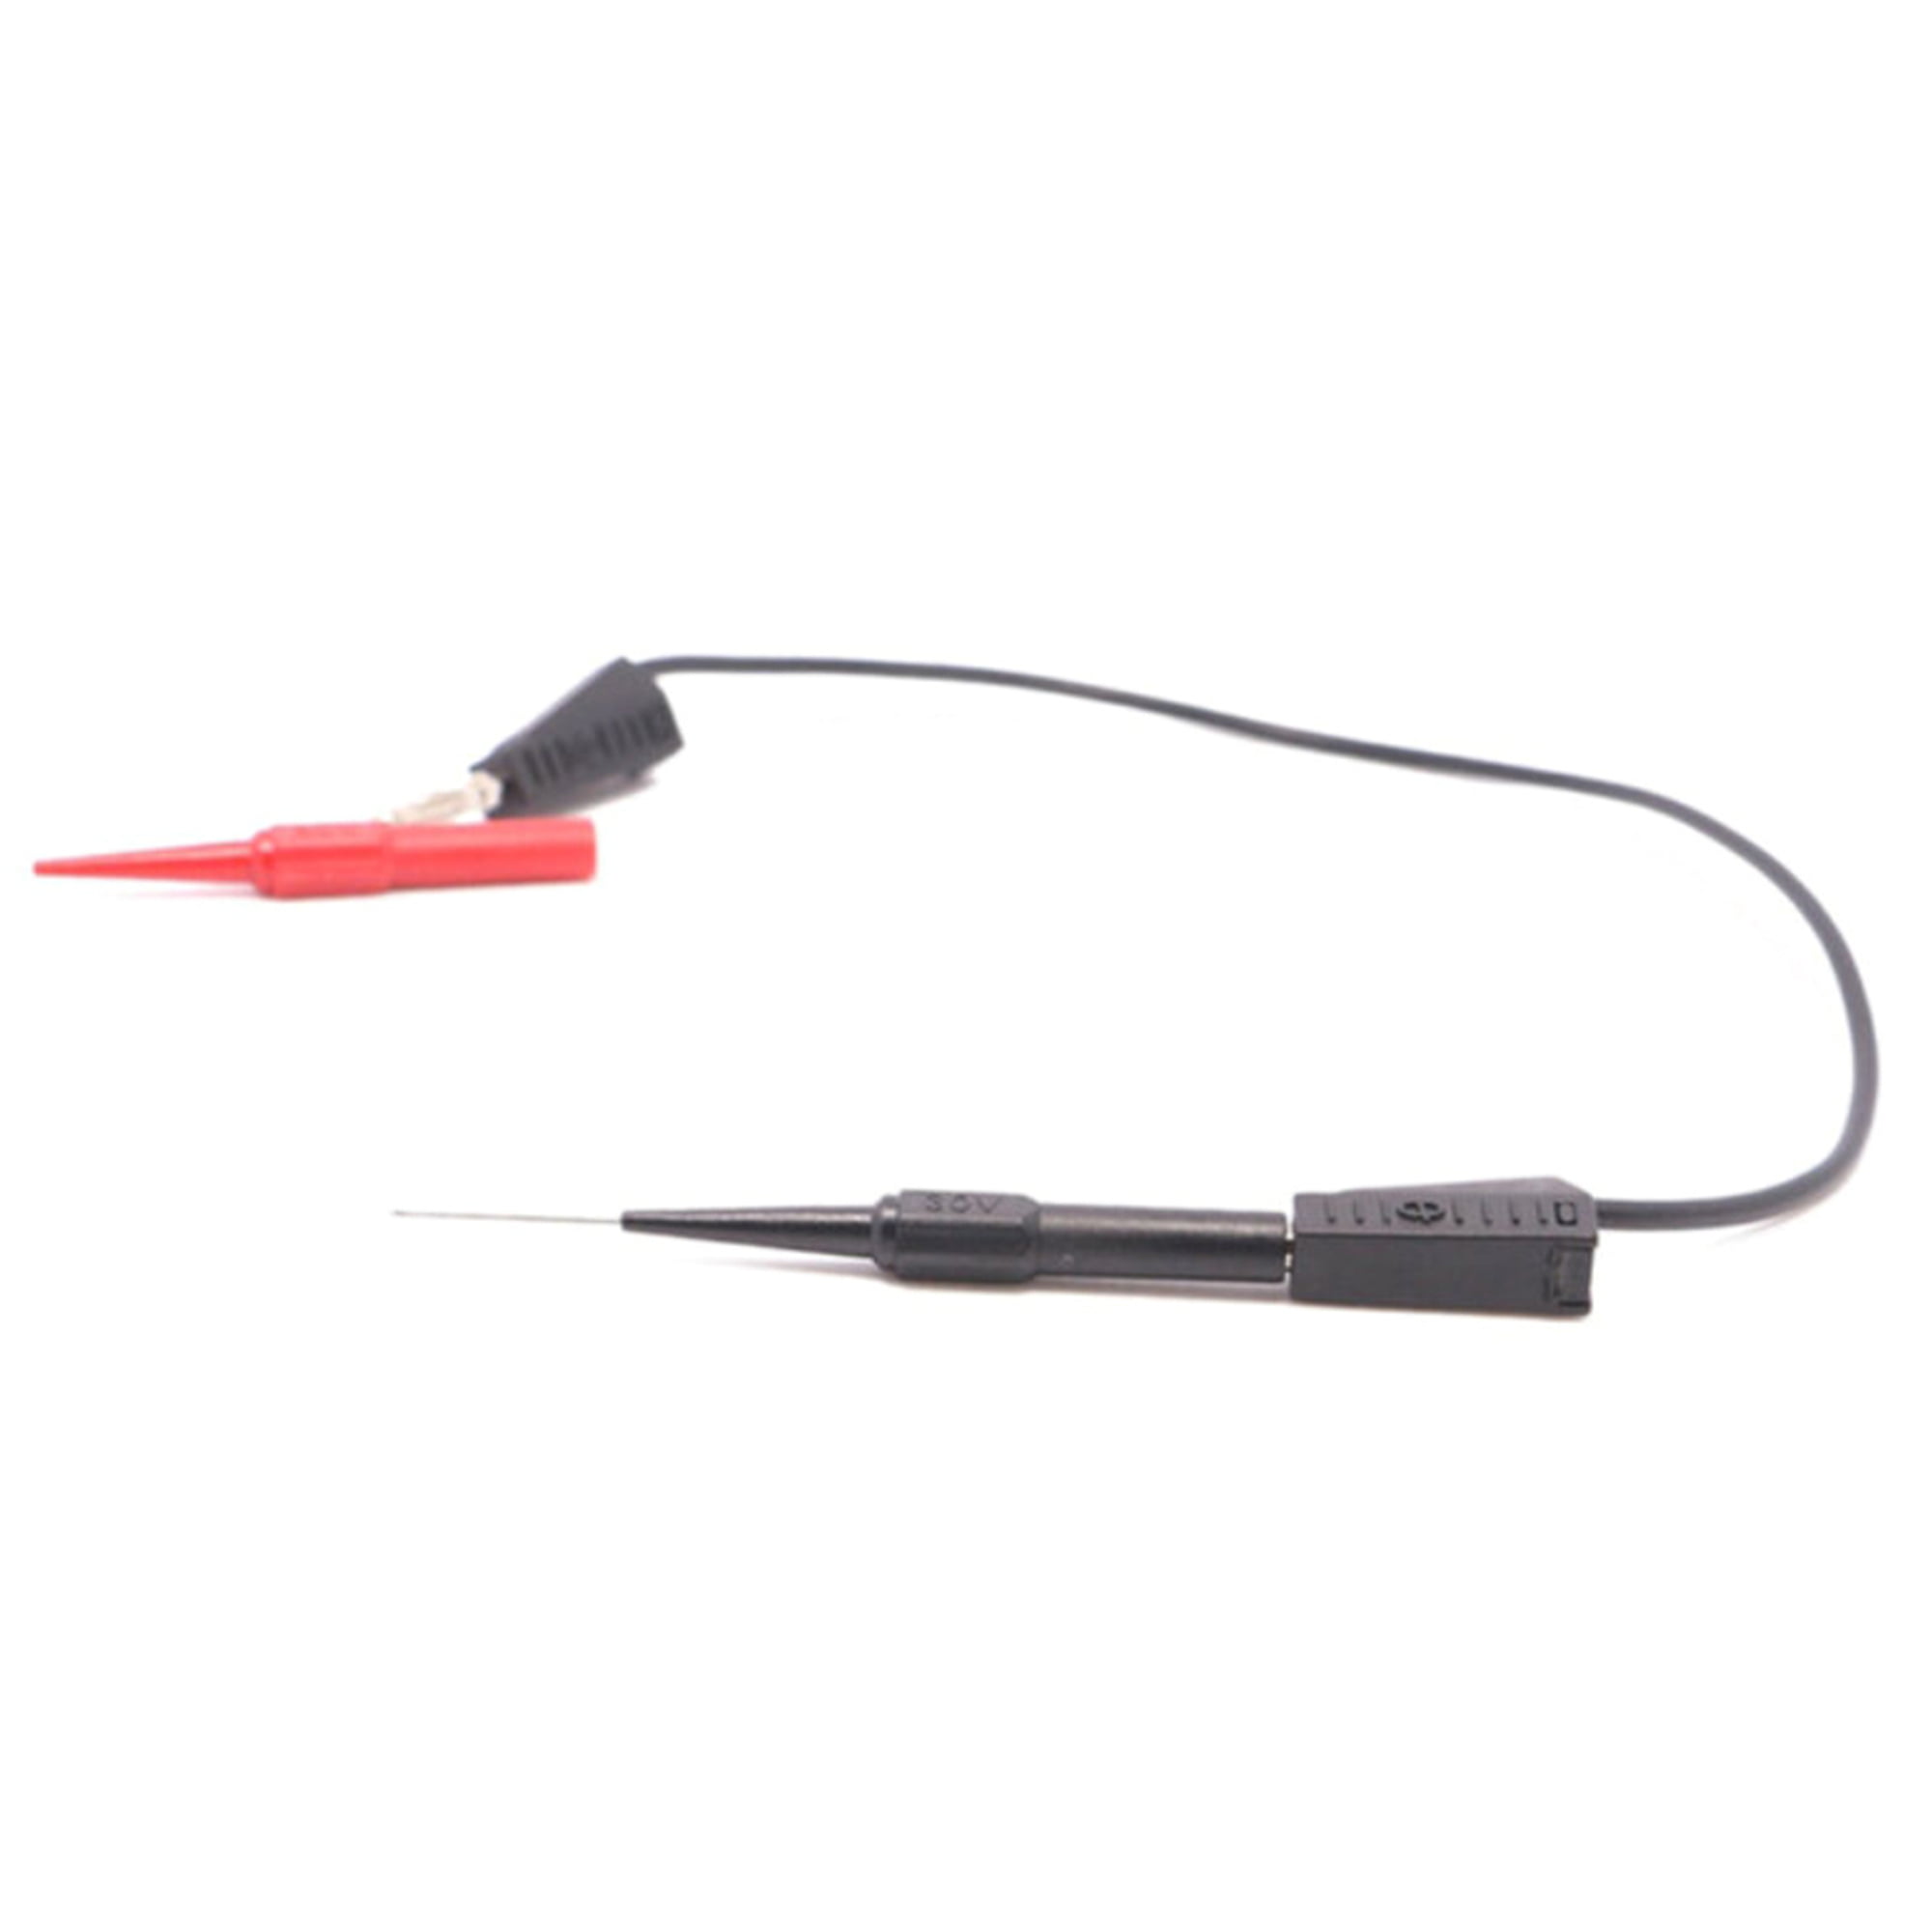 2x Multimeter Testing Lead Sharp Needle Micro Pin Fluke Extention Back Probes 